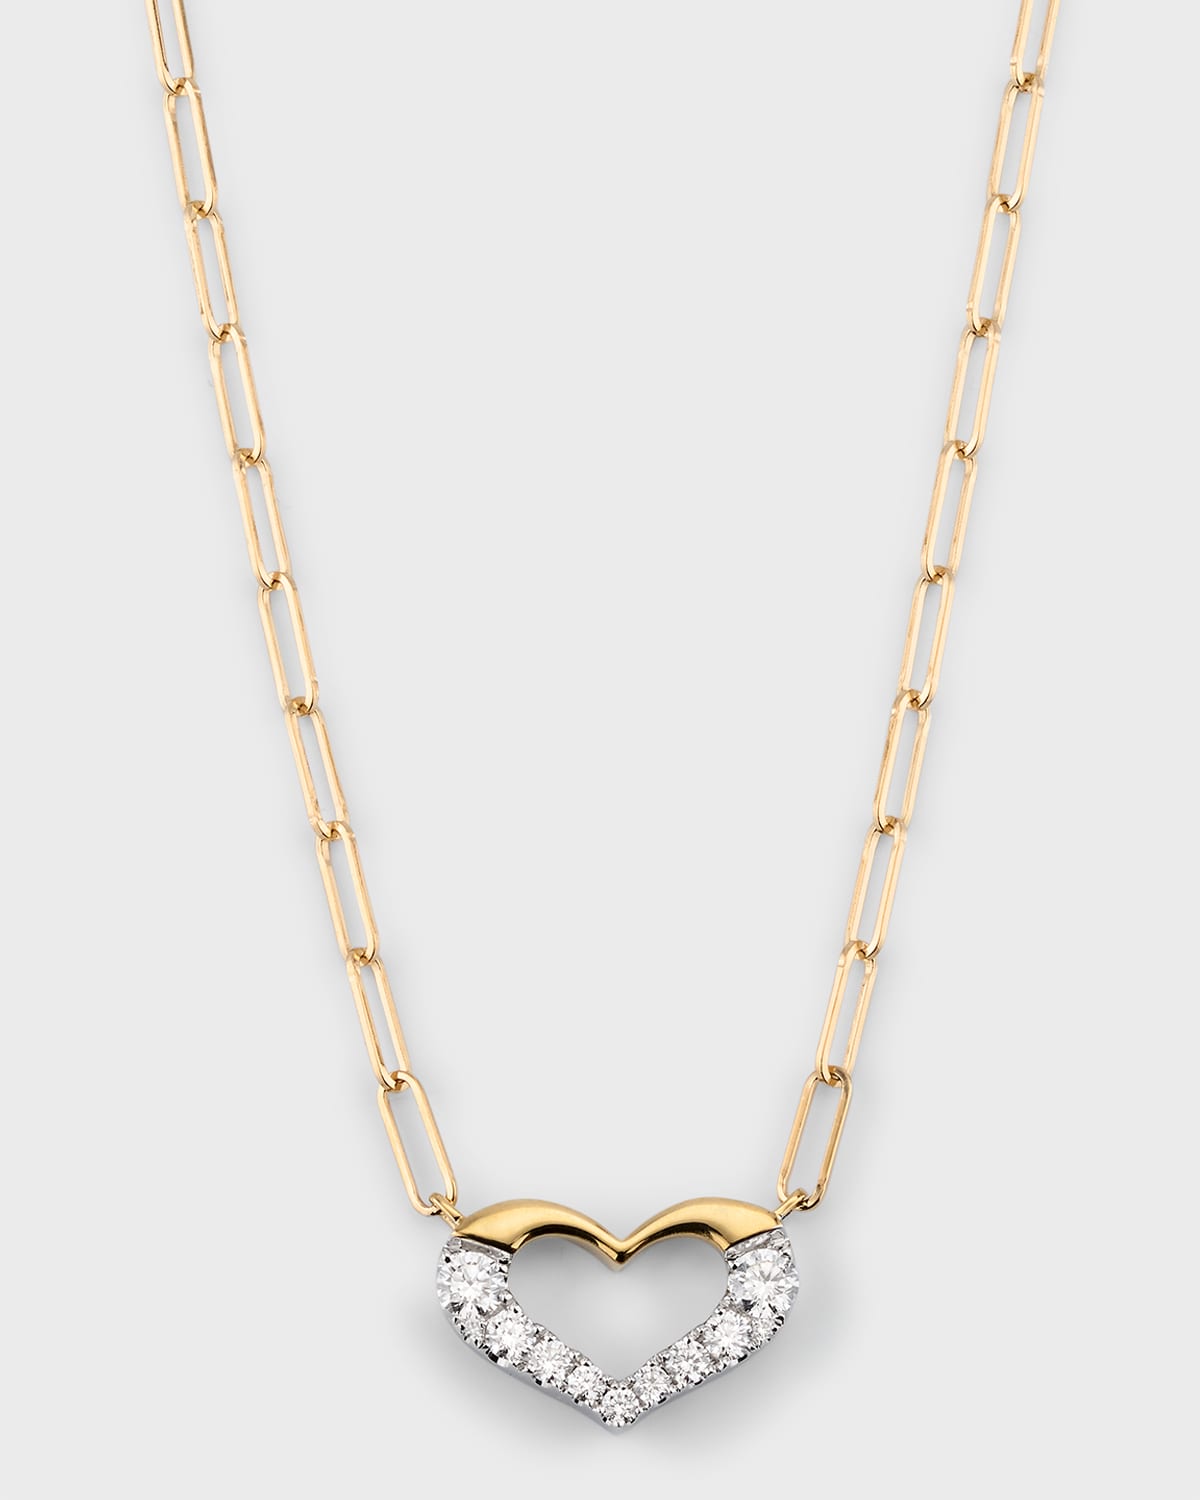 Frederic Sage Small "Clip" Heart Diamond Pendant Necklace